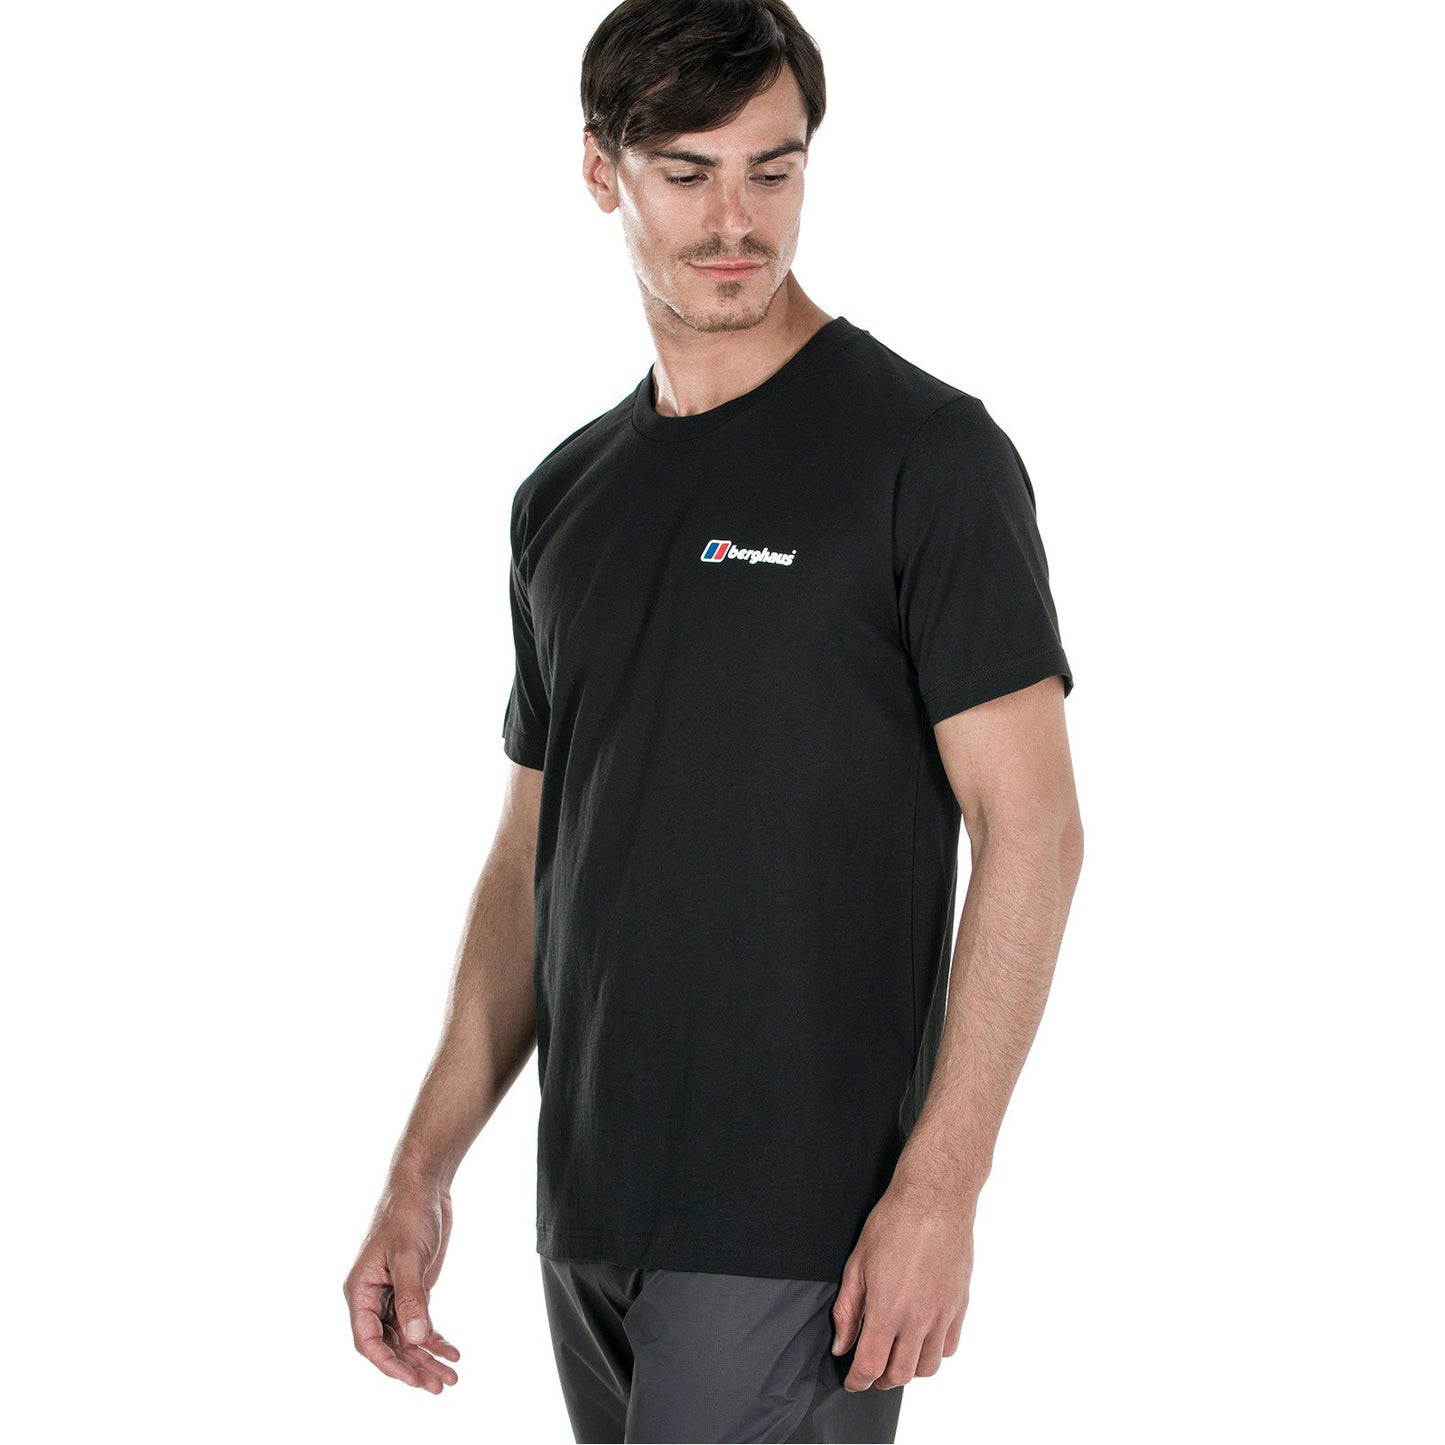 Berghaus Mens Corporate Logo T-Shirt